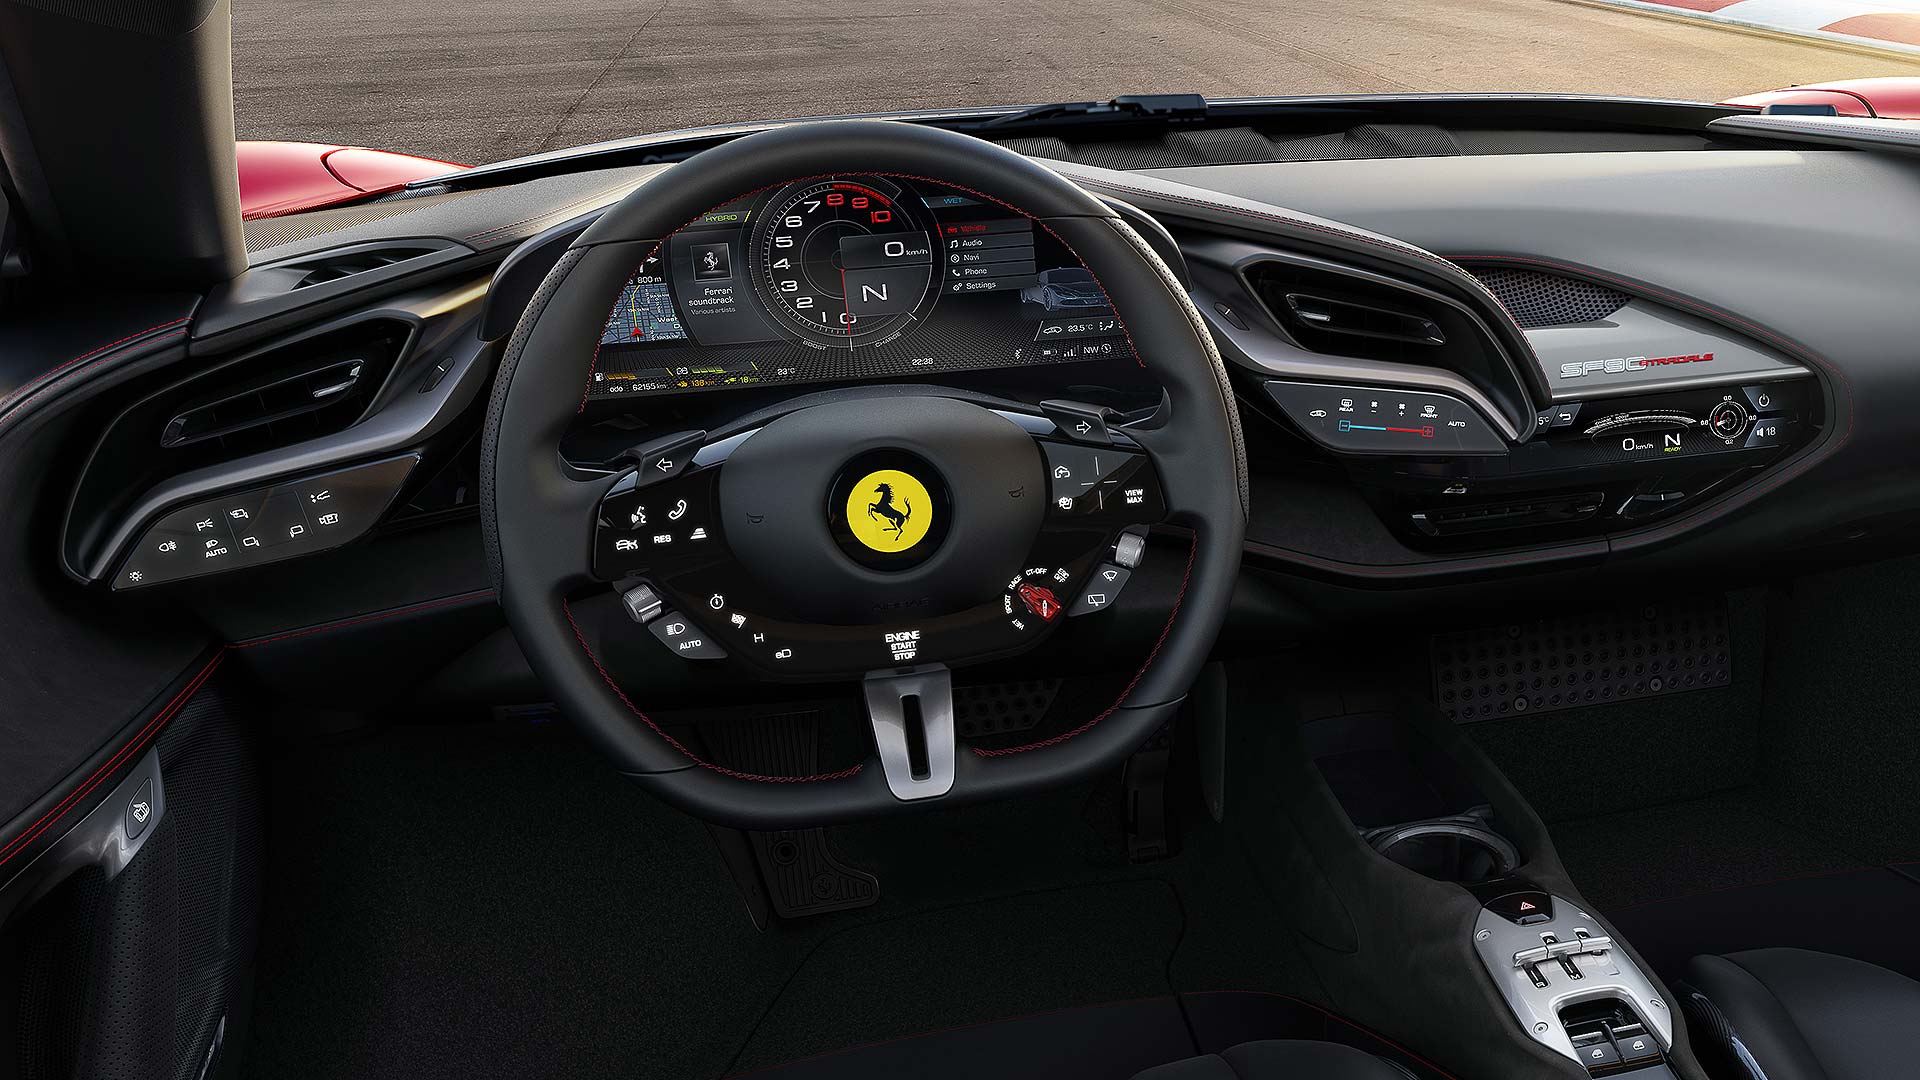 2020 Ferrari SF90 Stradale